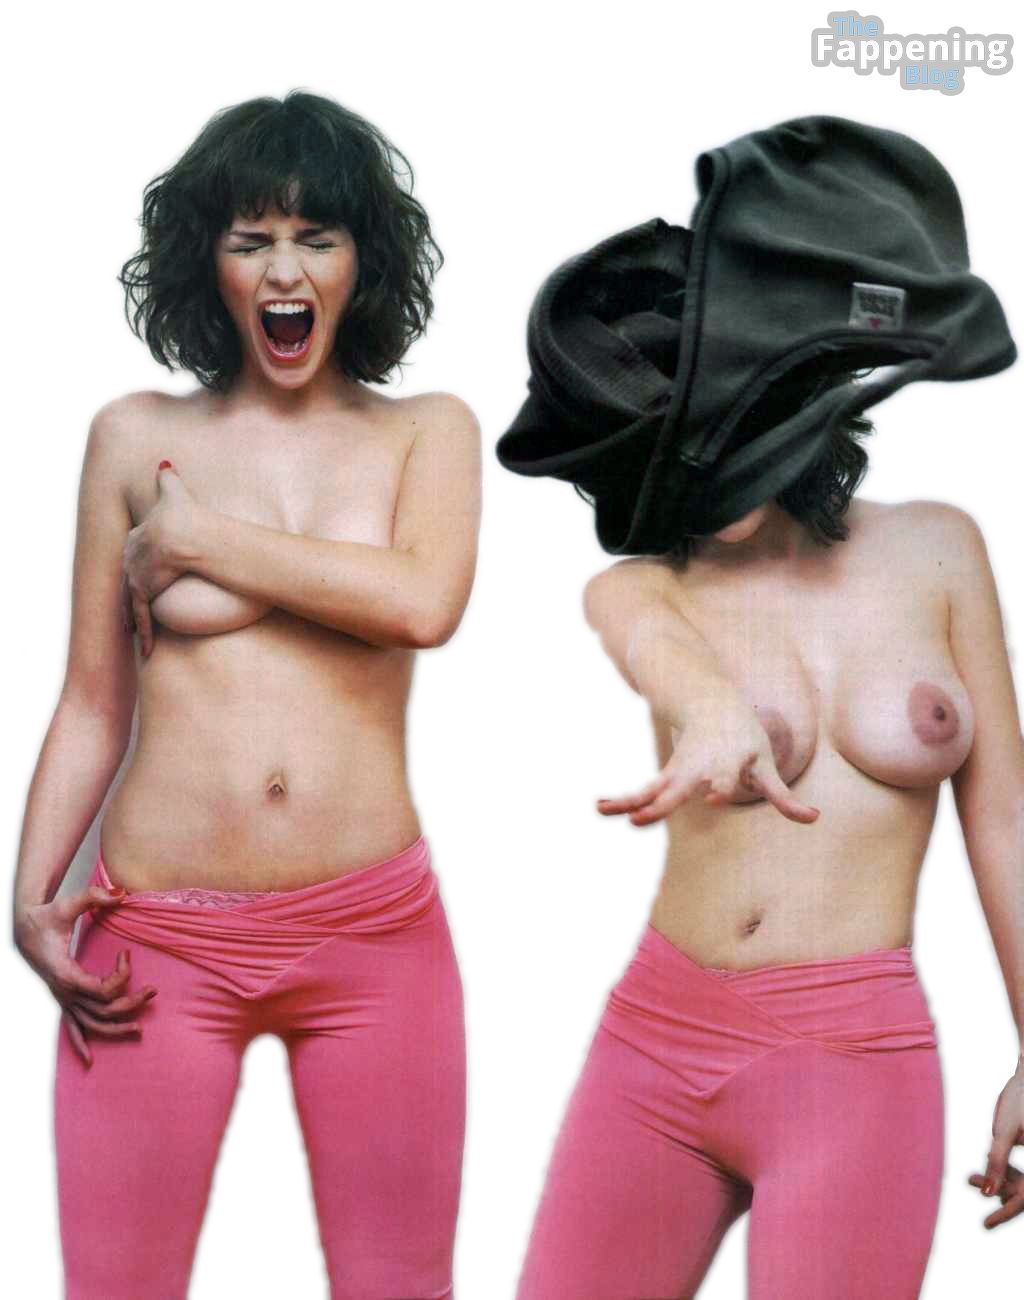 Romina-Ricci-Nude-Sexy-The-Fappening-Blog-1.jpg